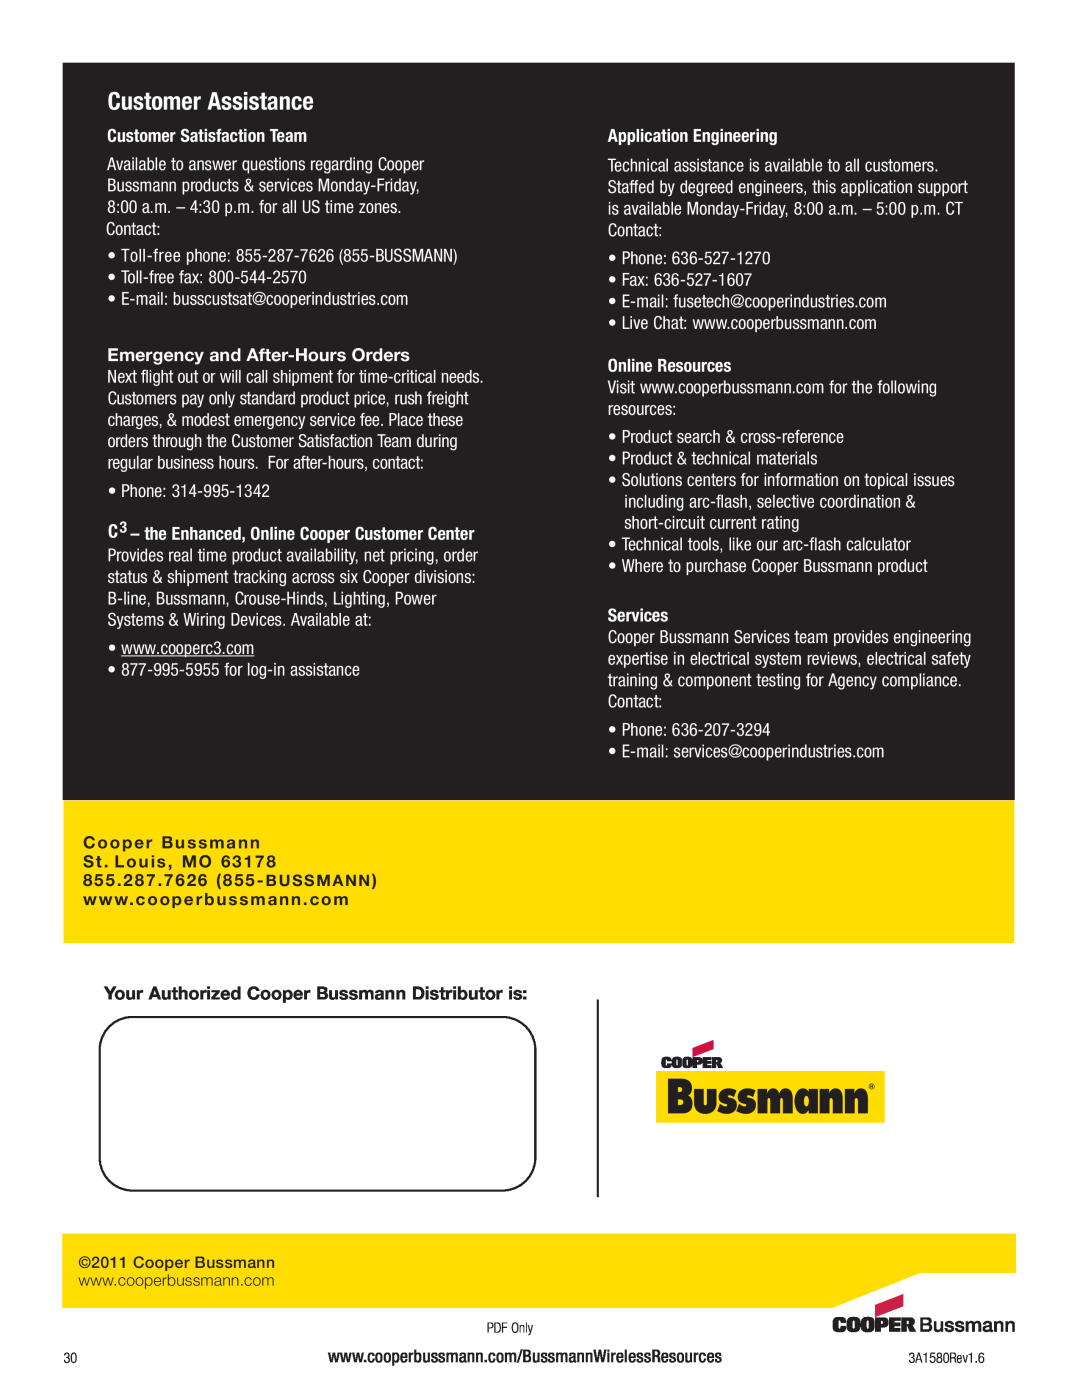 Cooper Bussmann BU-905U-L Customer Assistance, Customer Satisfaction Team, Emergency and After-HoursOrders, Services 